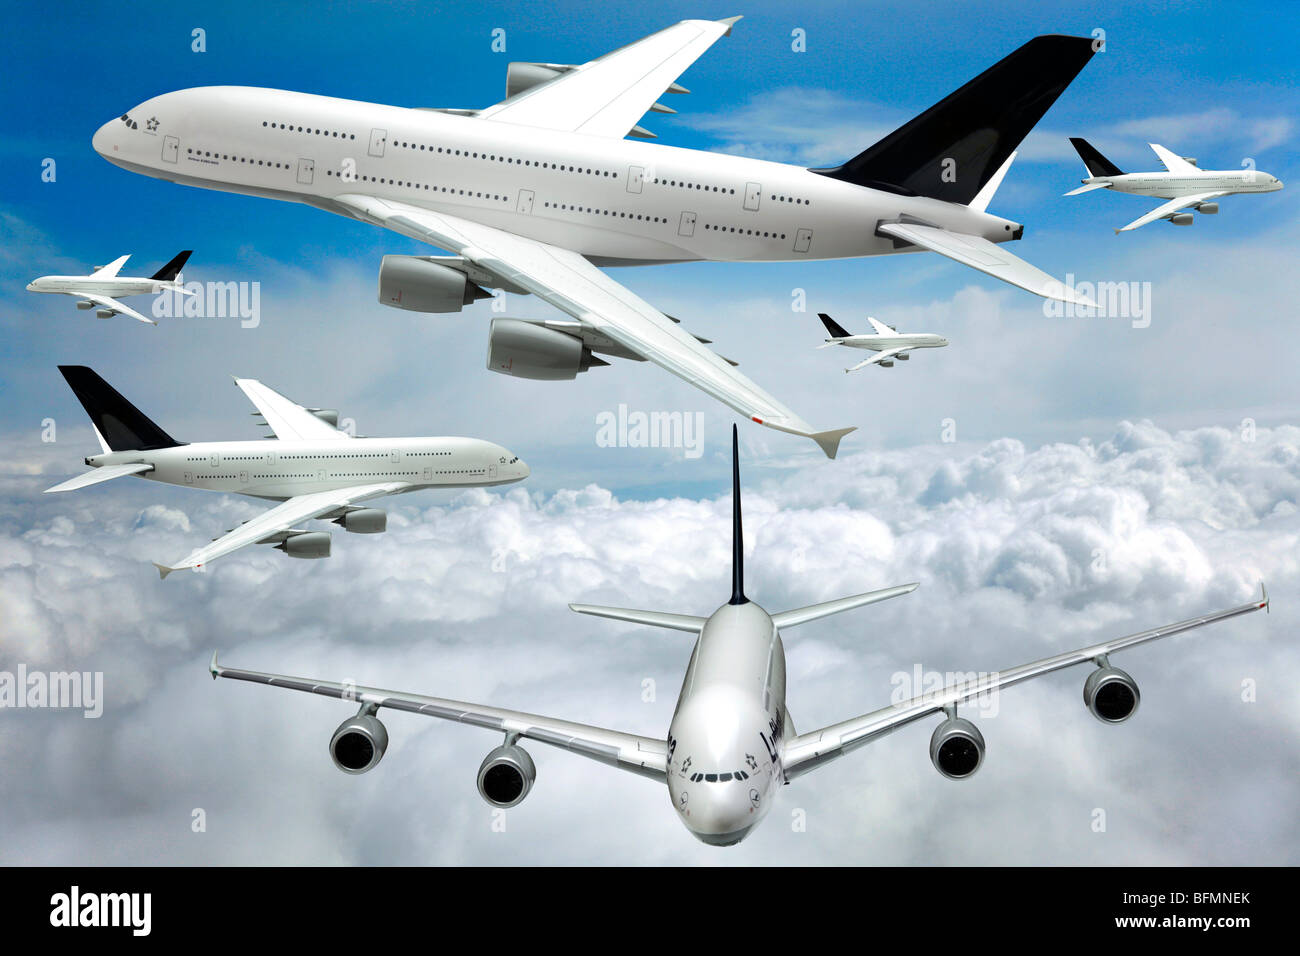 Air traffic, conceptual image Stock Photo